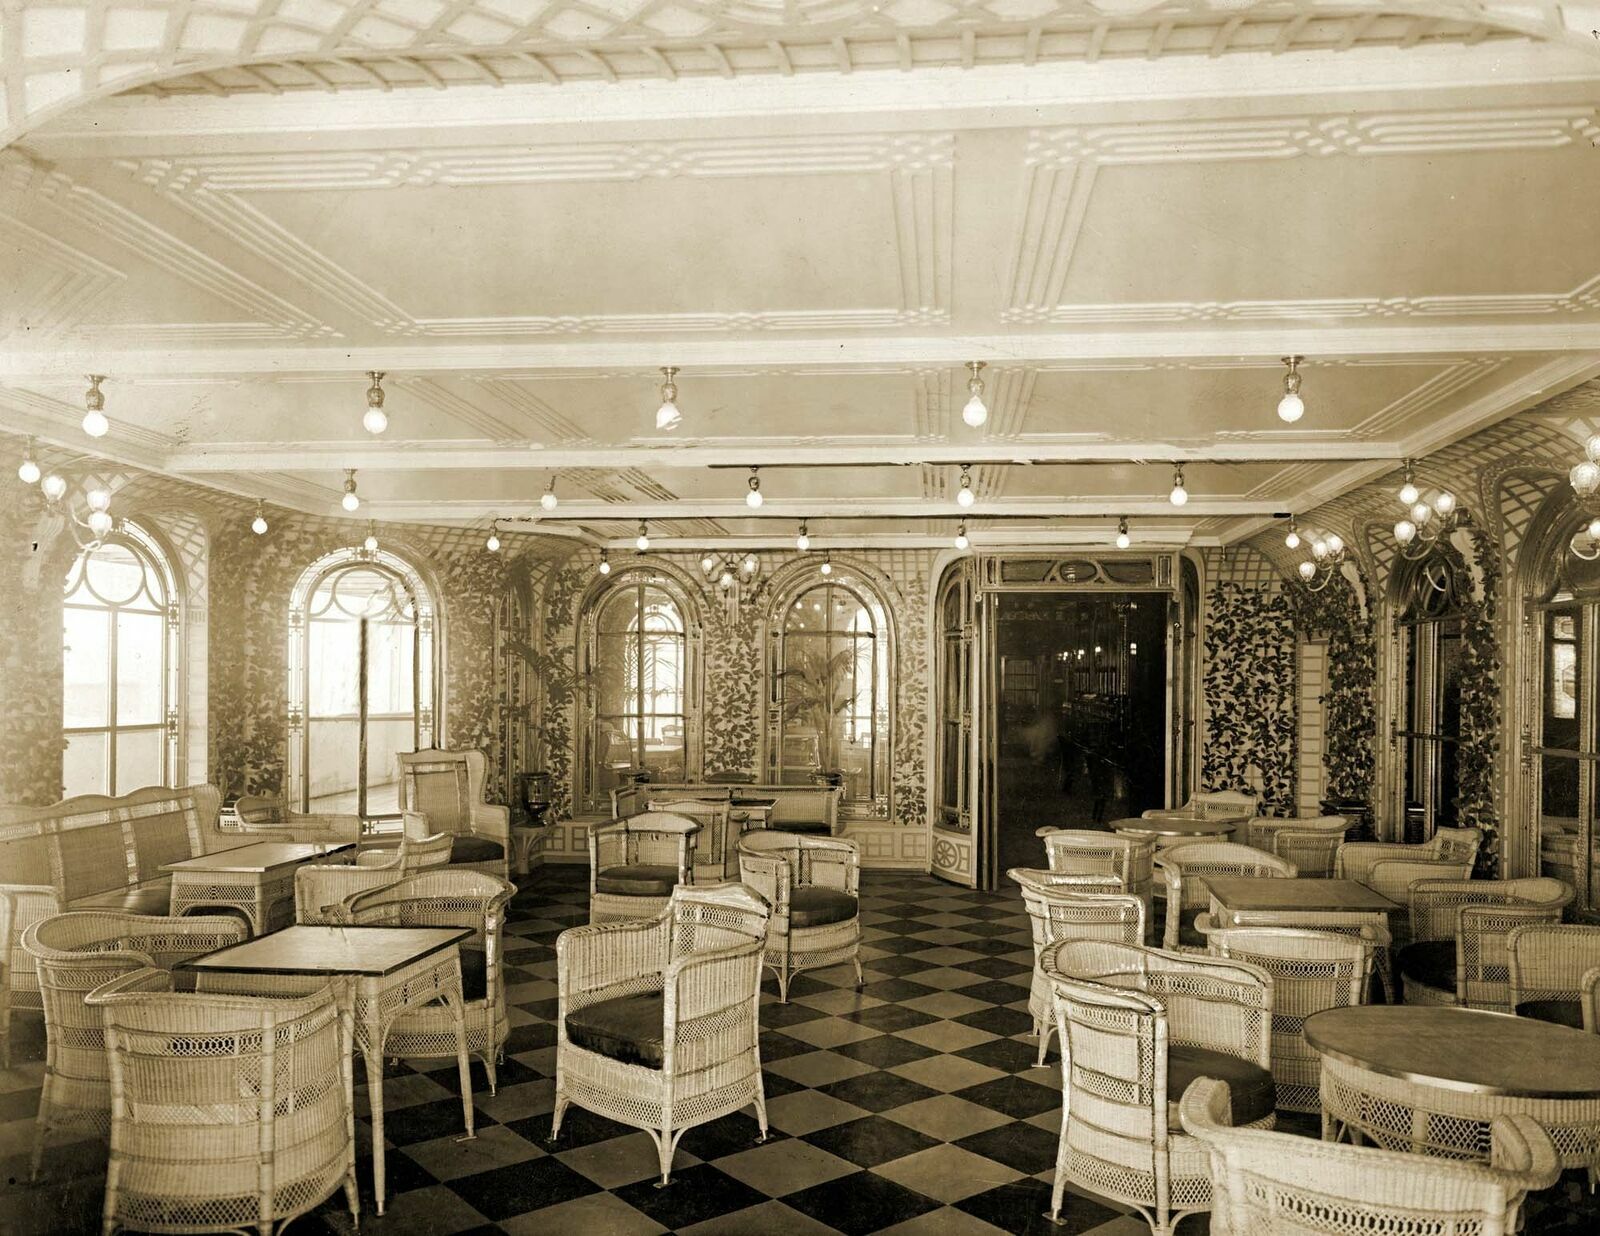 1912 Veranda Cafe & Palm Court of the Titanic Historic Picture Photo Print 5x7